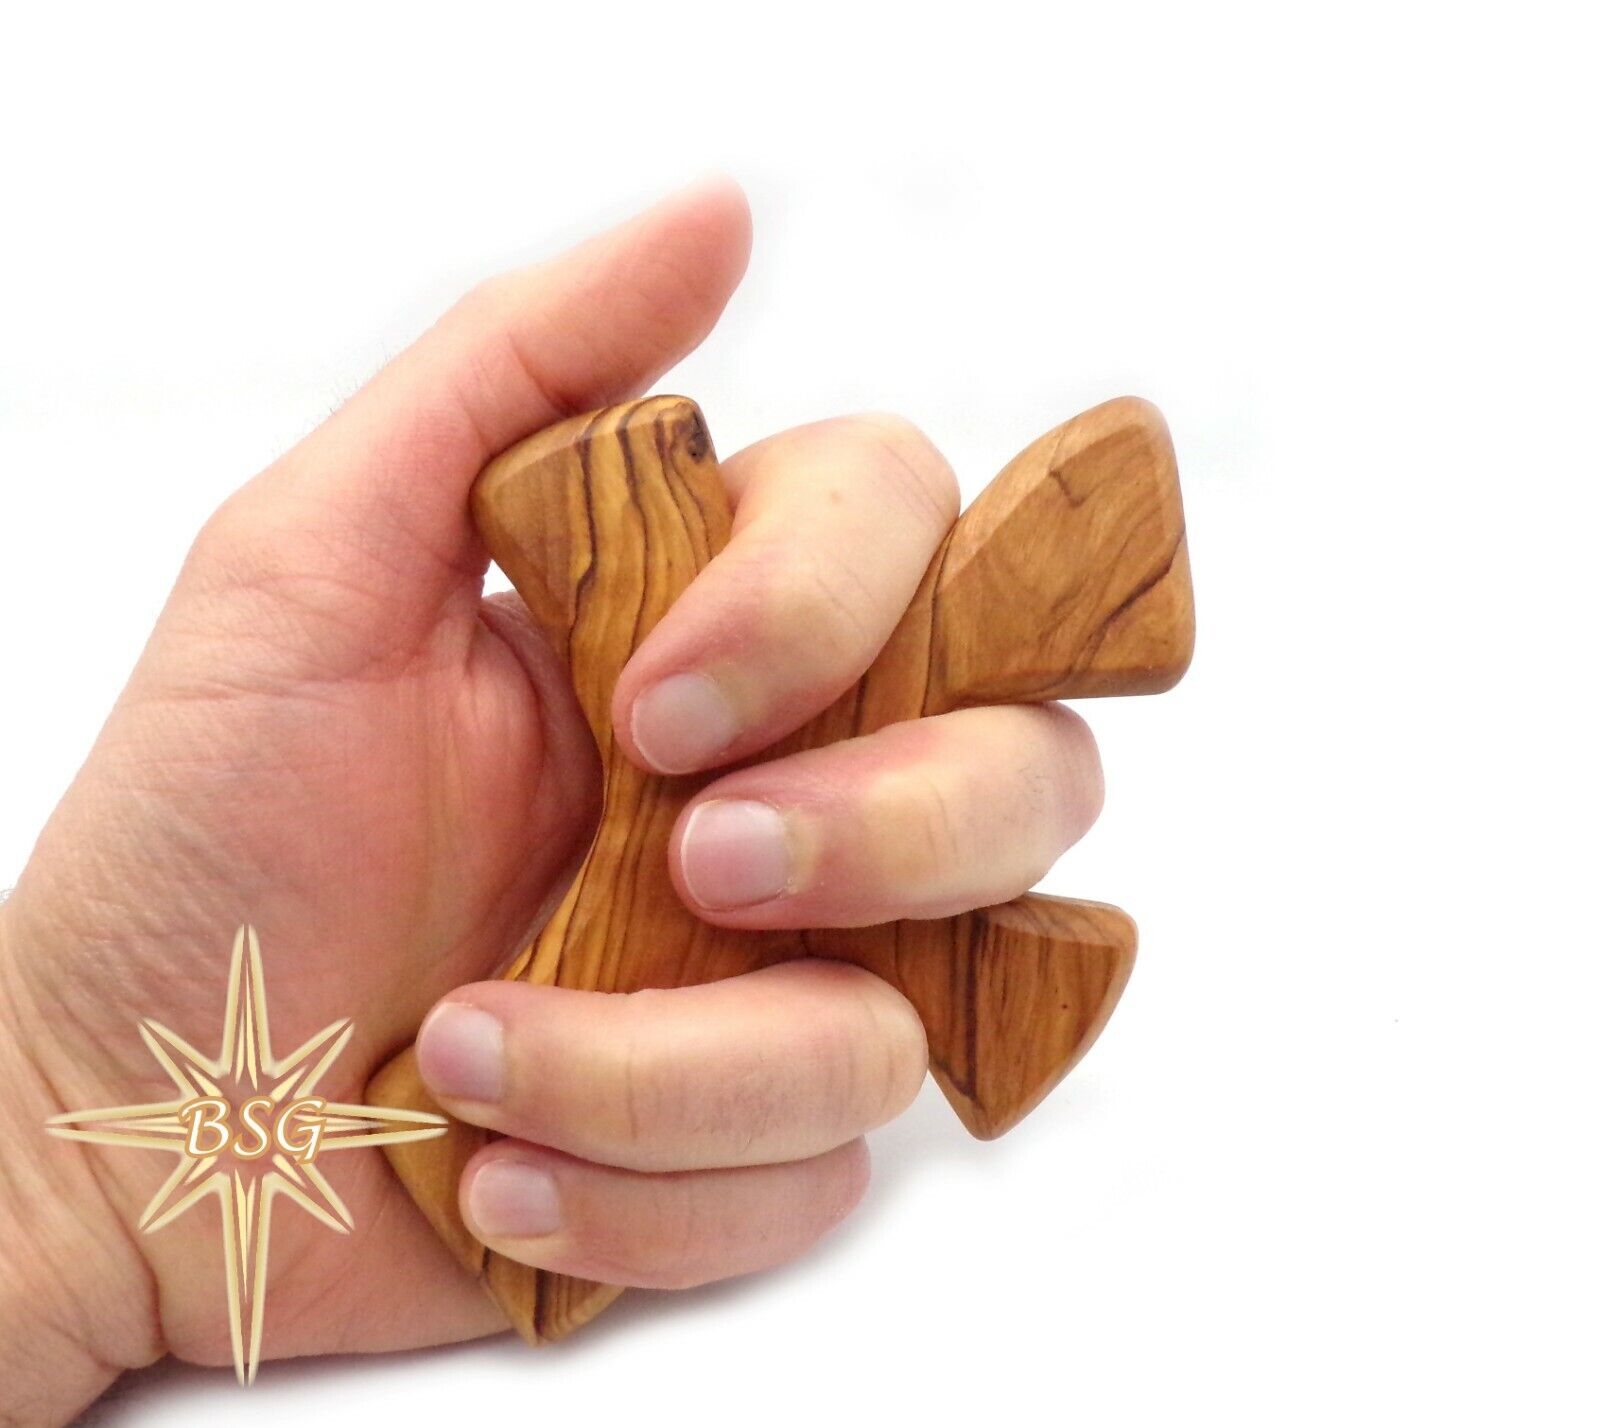 5'' Prayer olive wood healing cross, Comfort palm, holding handheld